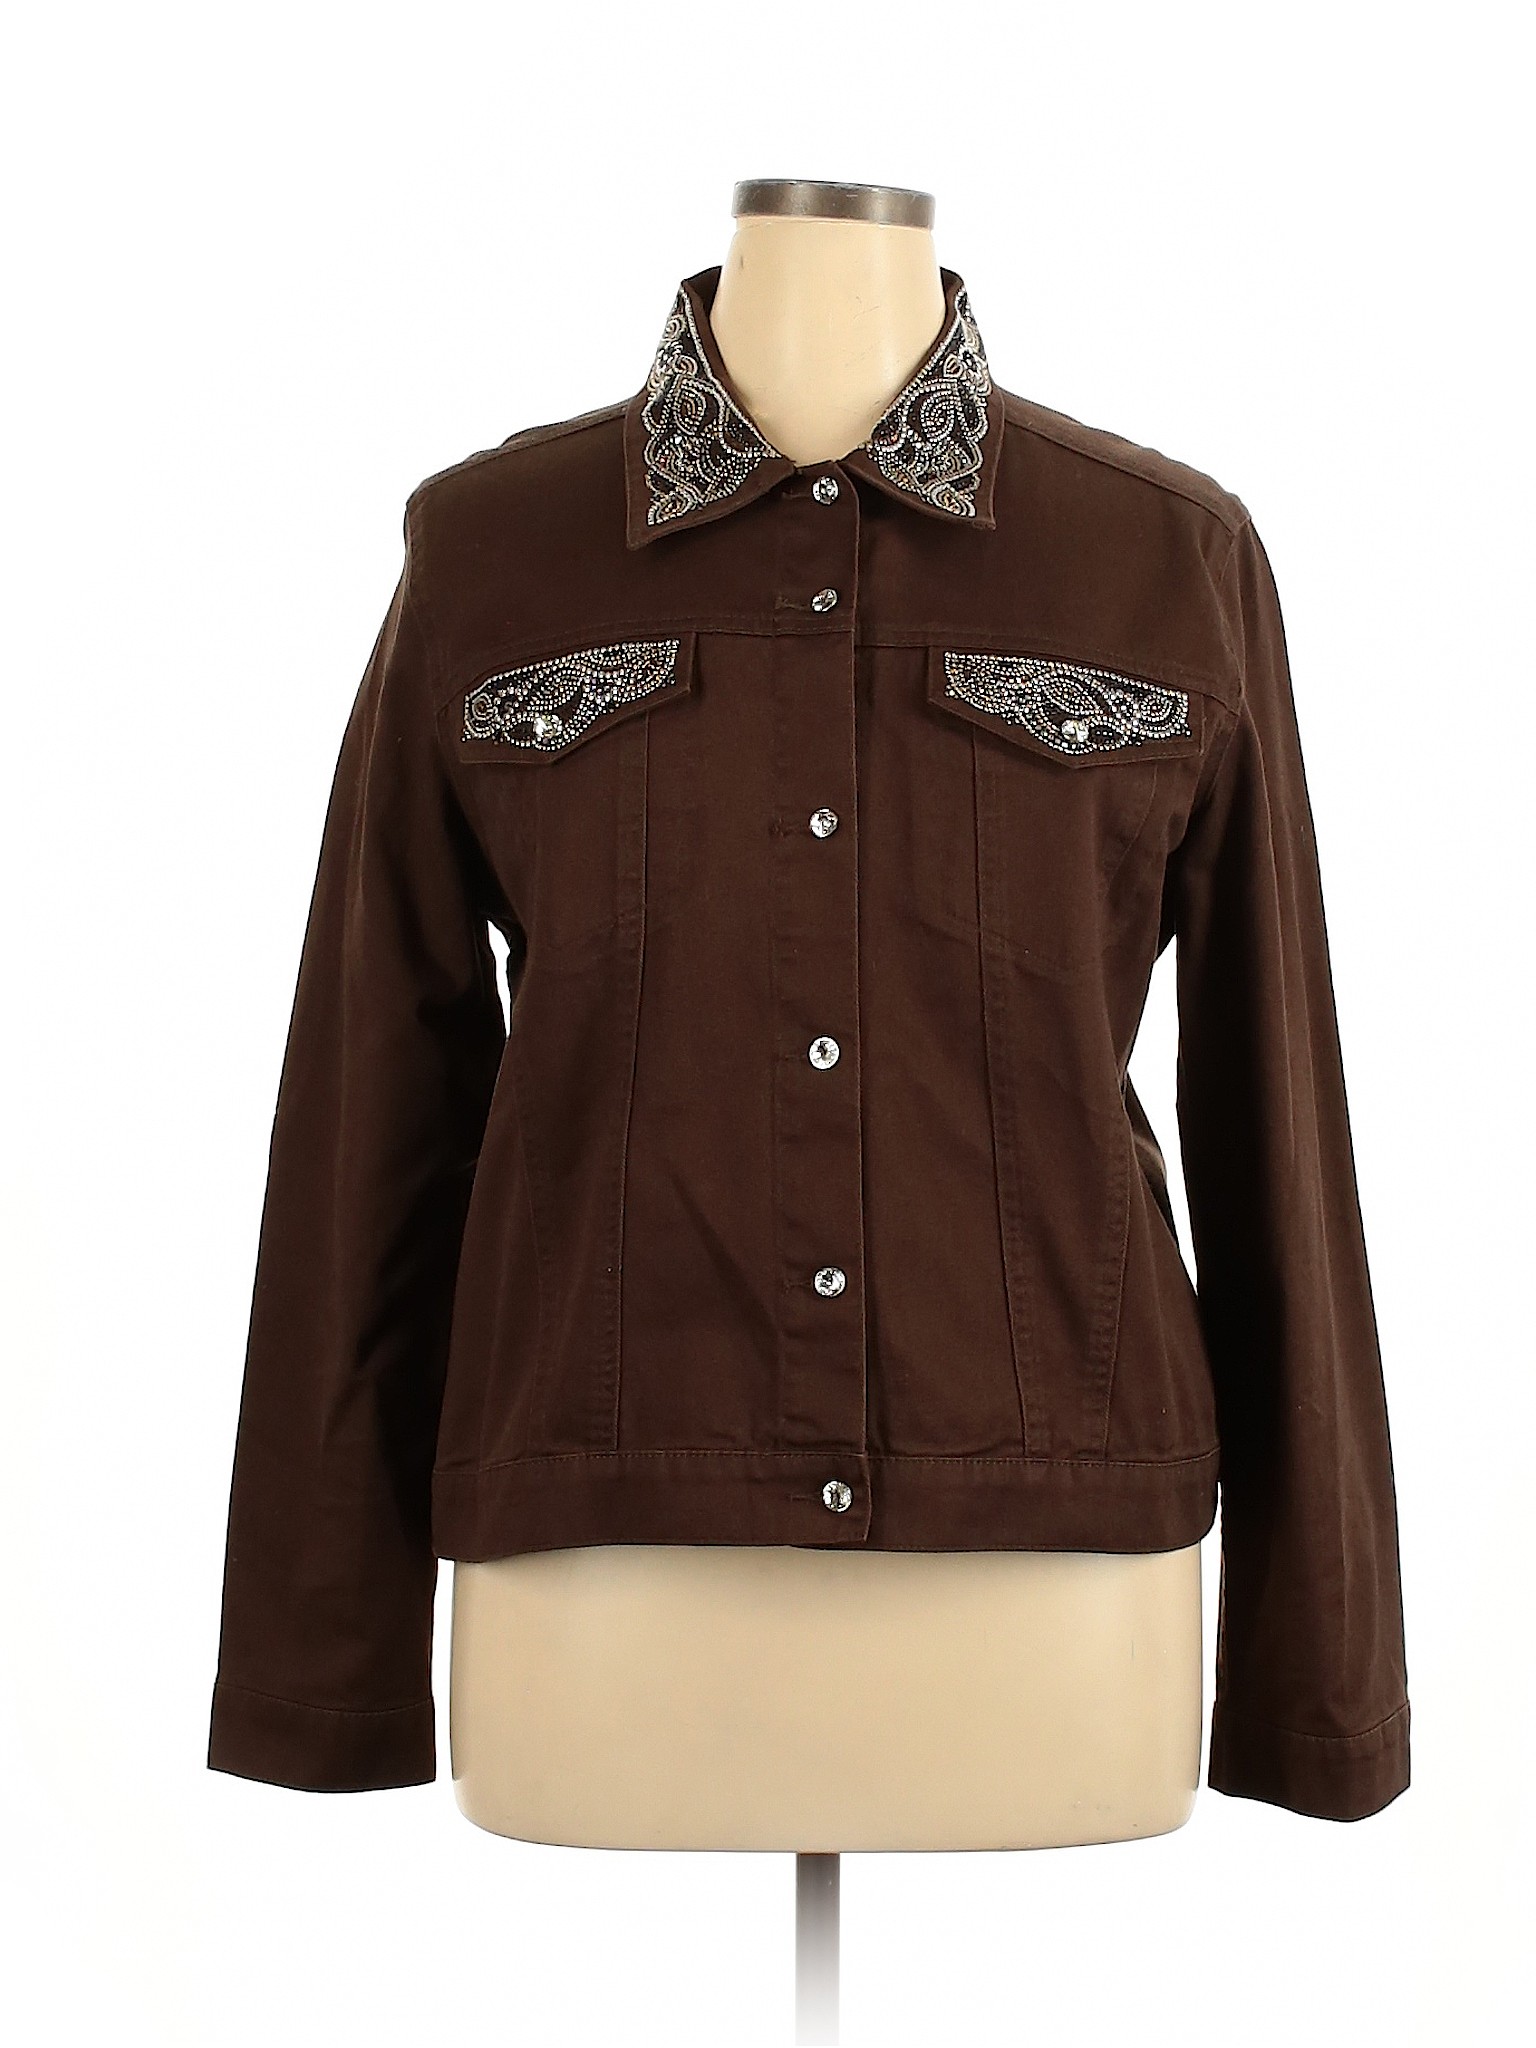 CHRISTINE ALEXANDER 100% Cotton Solid Brown Jacket Size XL - 77% off ...